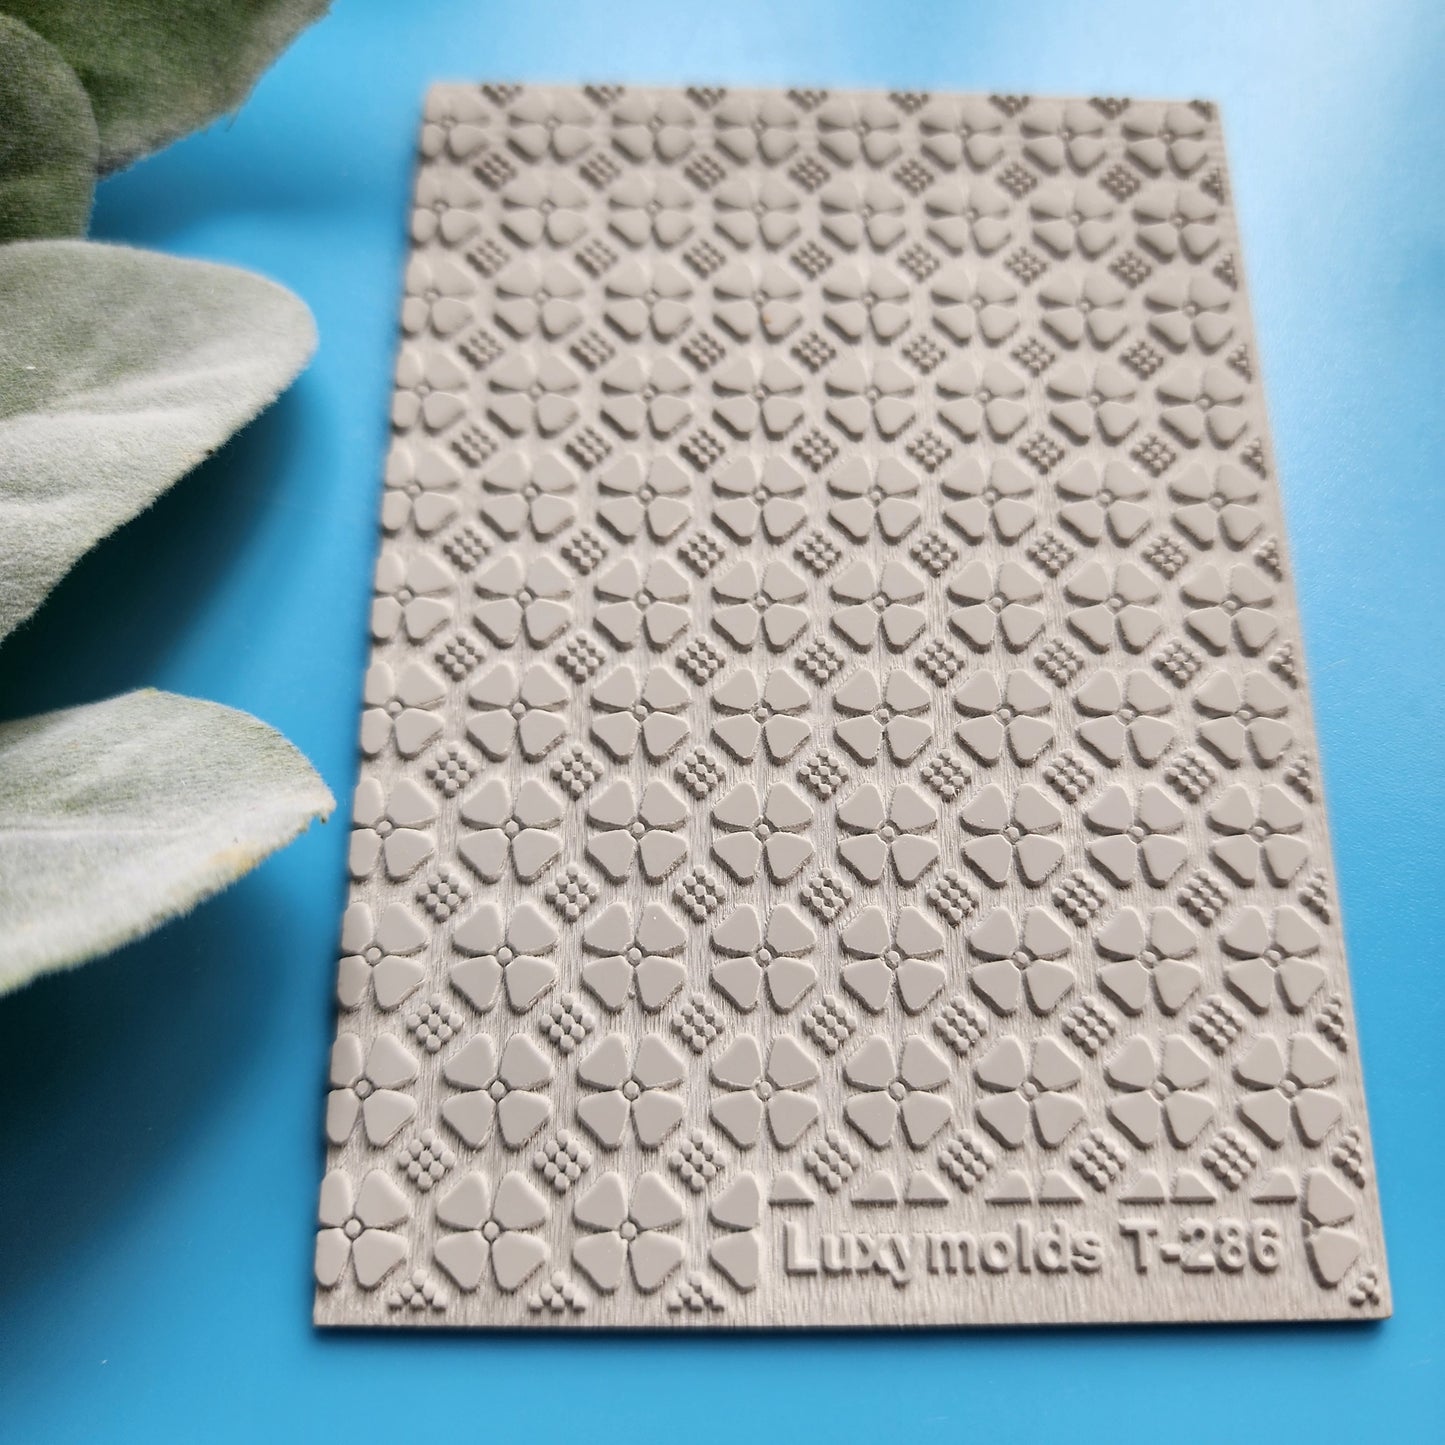 Polymer clay Texture tile Texture mat Clay stamp Polymer clay texture stencils "Flower" design clay texture Rubber mat T-286